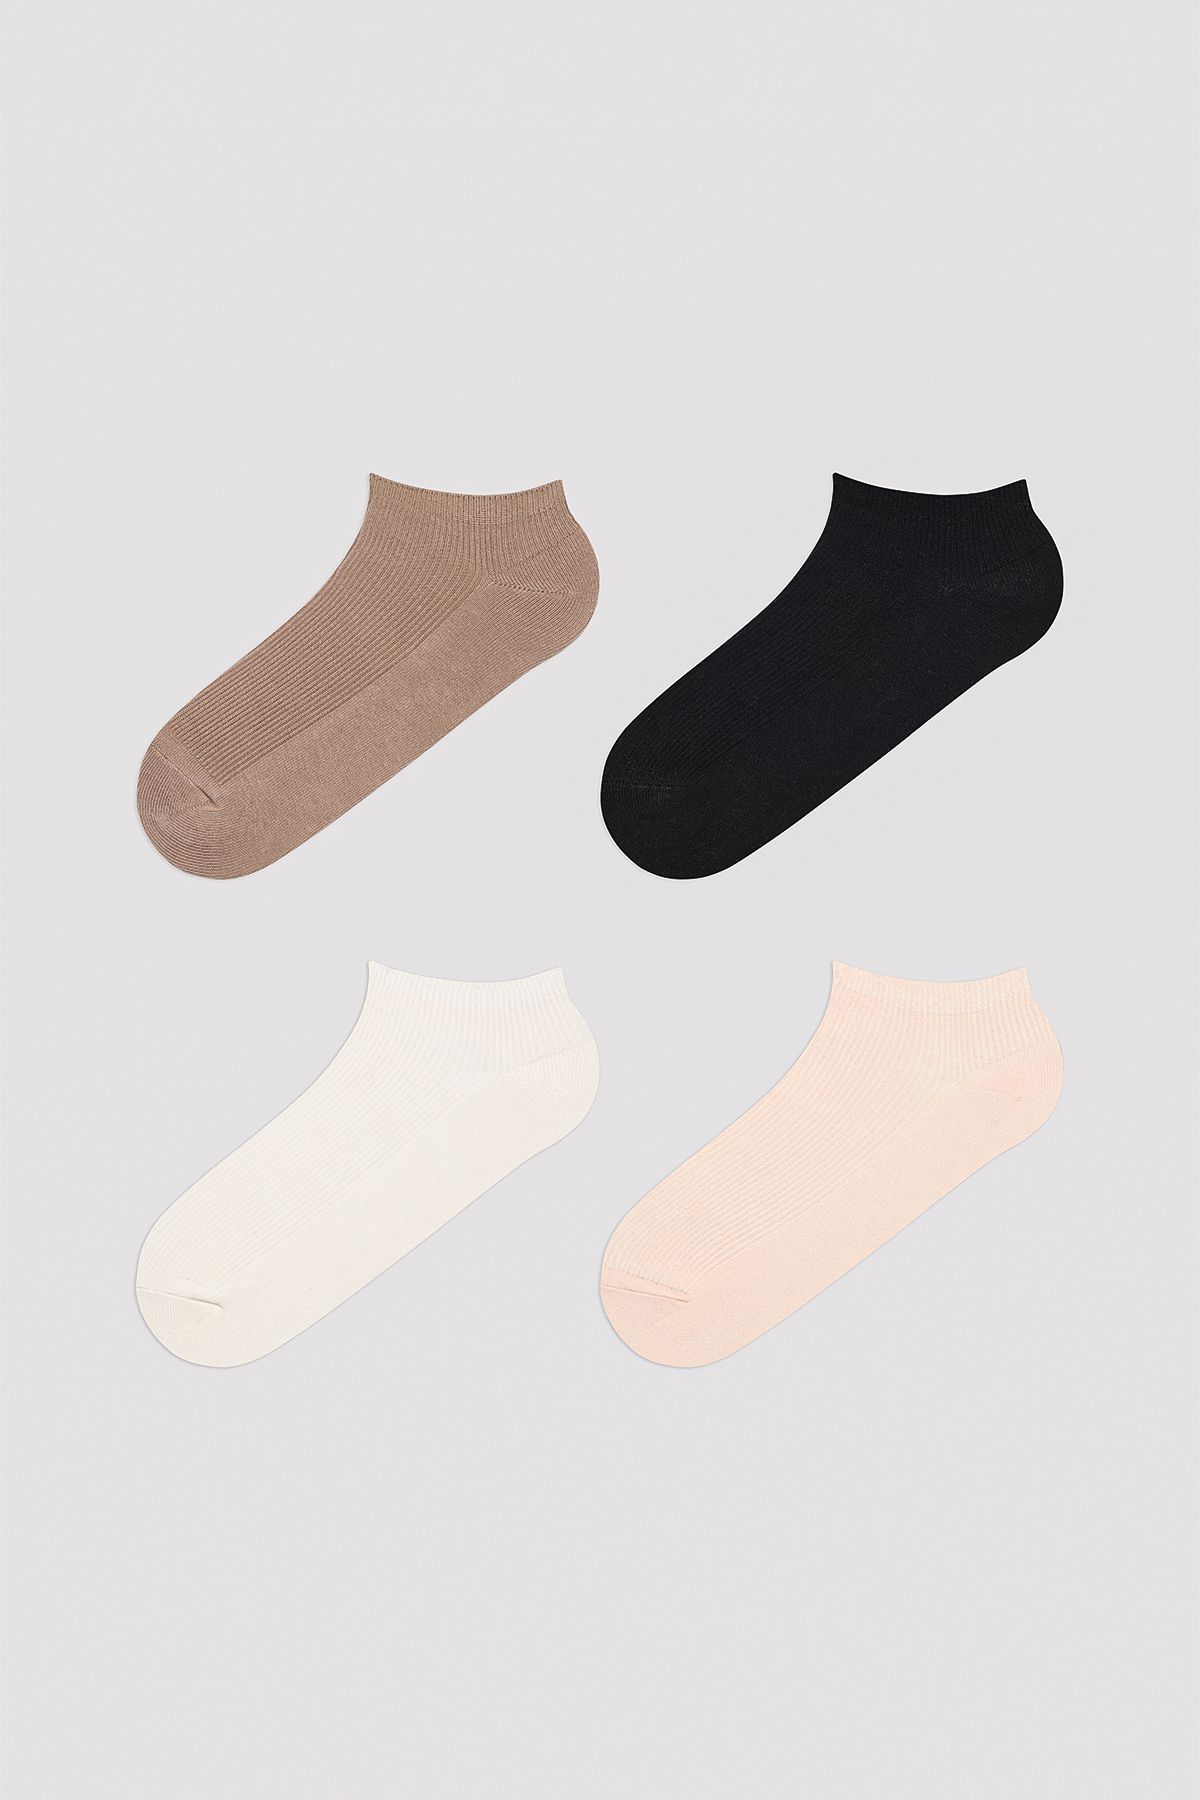 Penti Soil Color Açık Kahverengi 4lü Patik Çorap